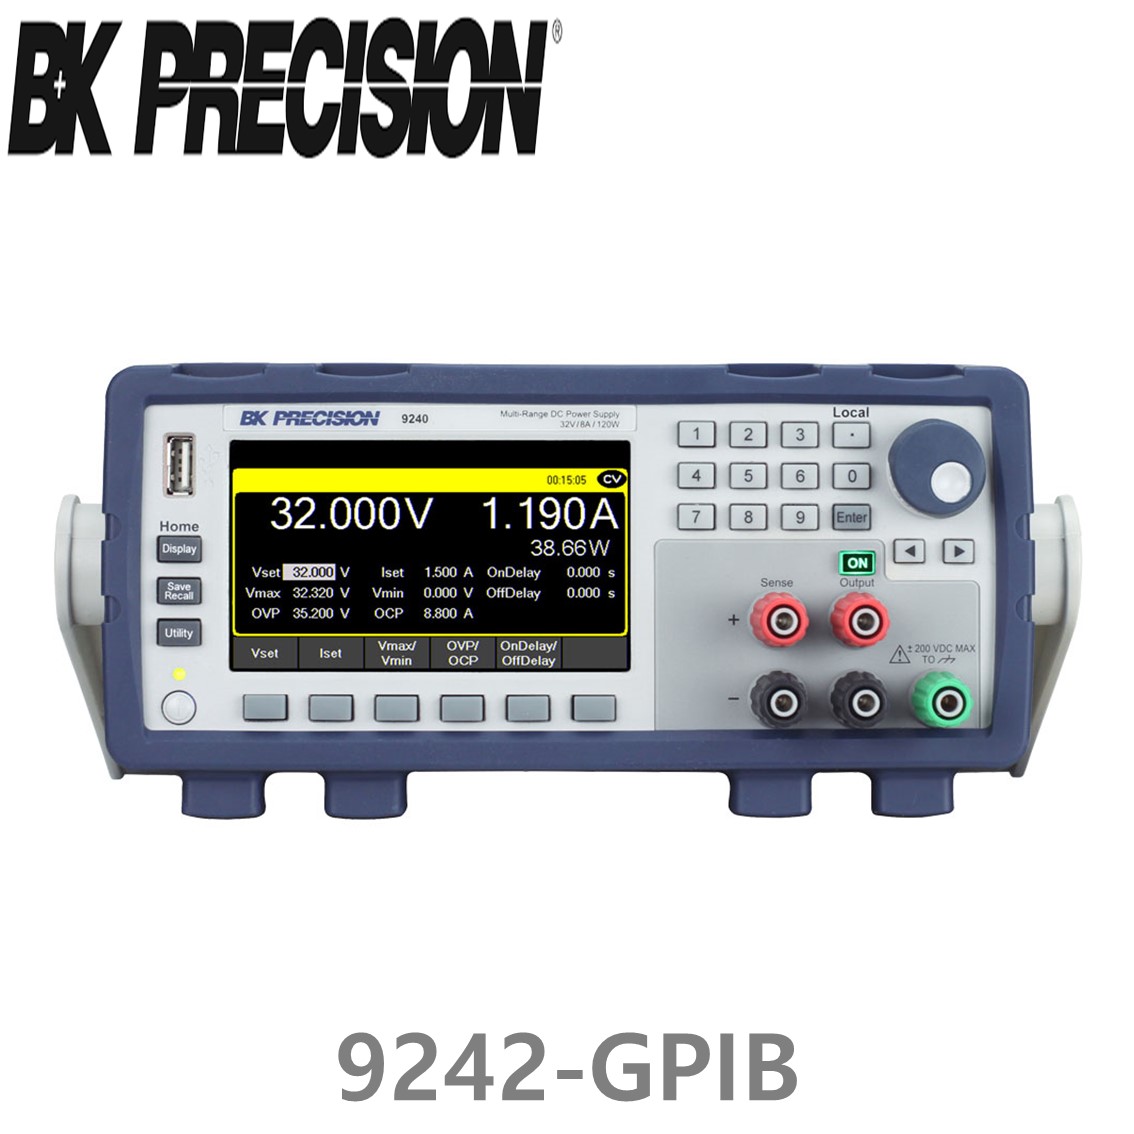 [ BK Precision ] 9242-GPIB  60V/10A/200W GPIB 다중 범위 DC 전원공급장치